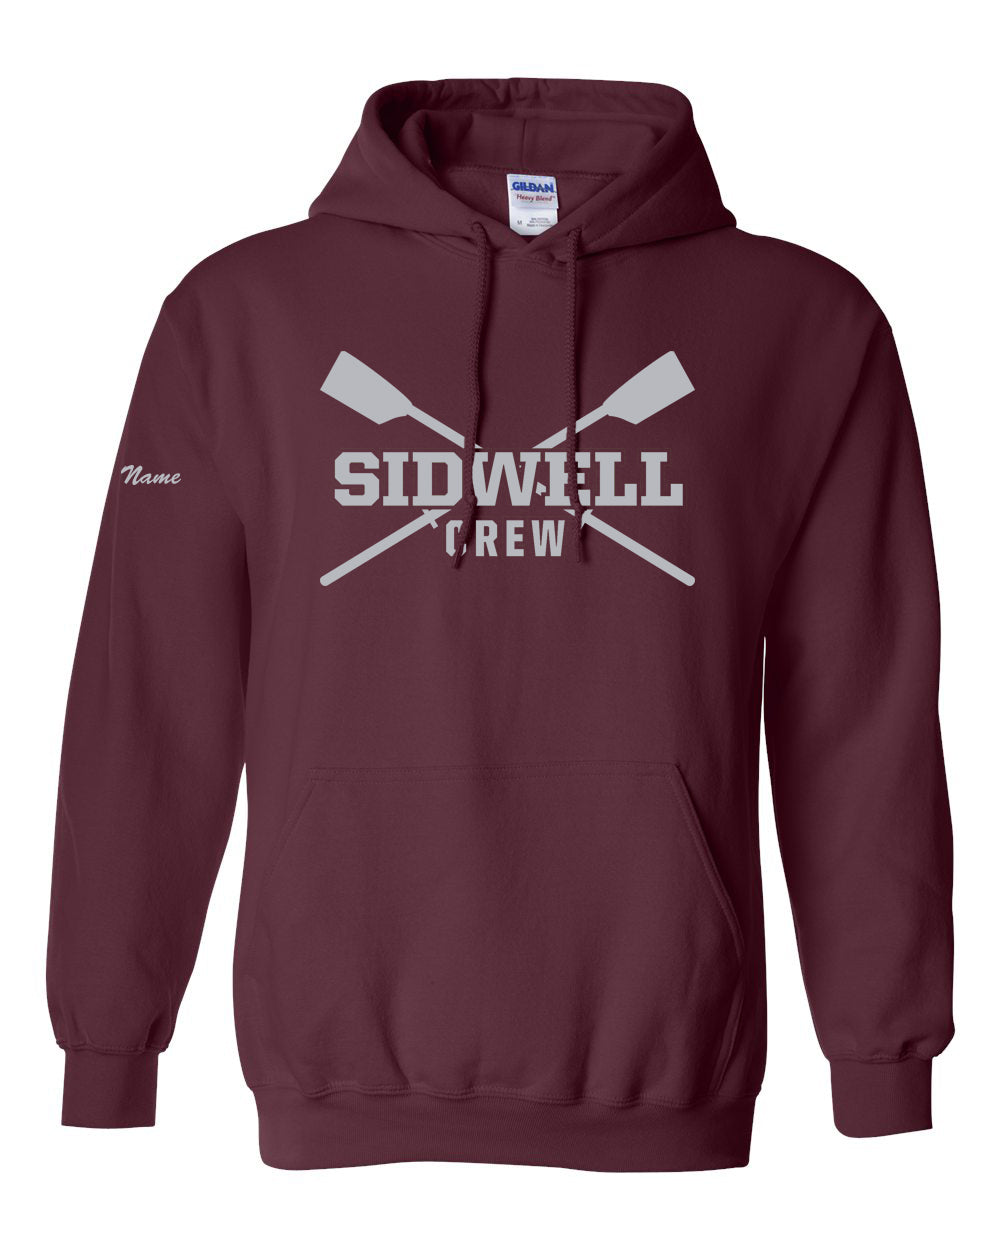 50/50 Hooded Sidwell Friends Rowing Sweatshirts